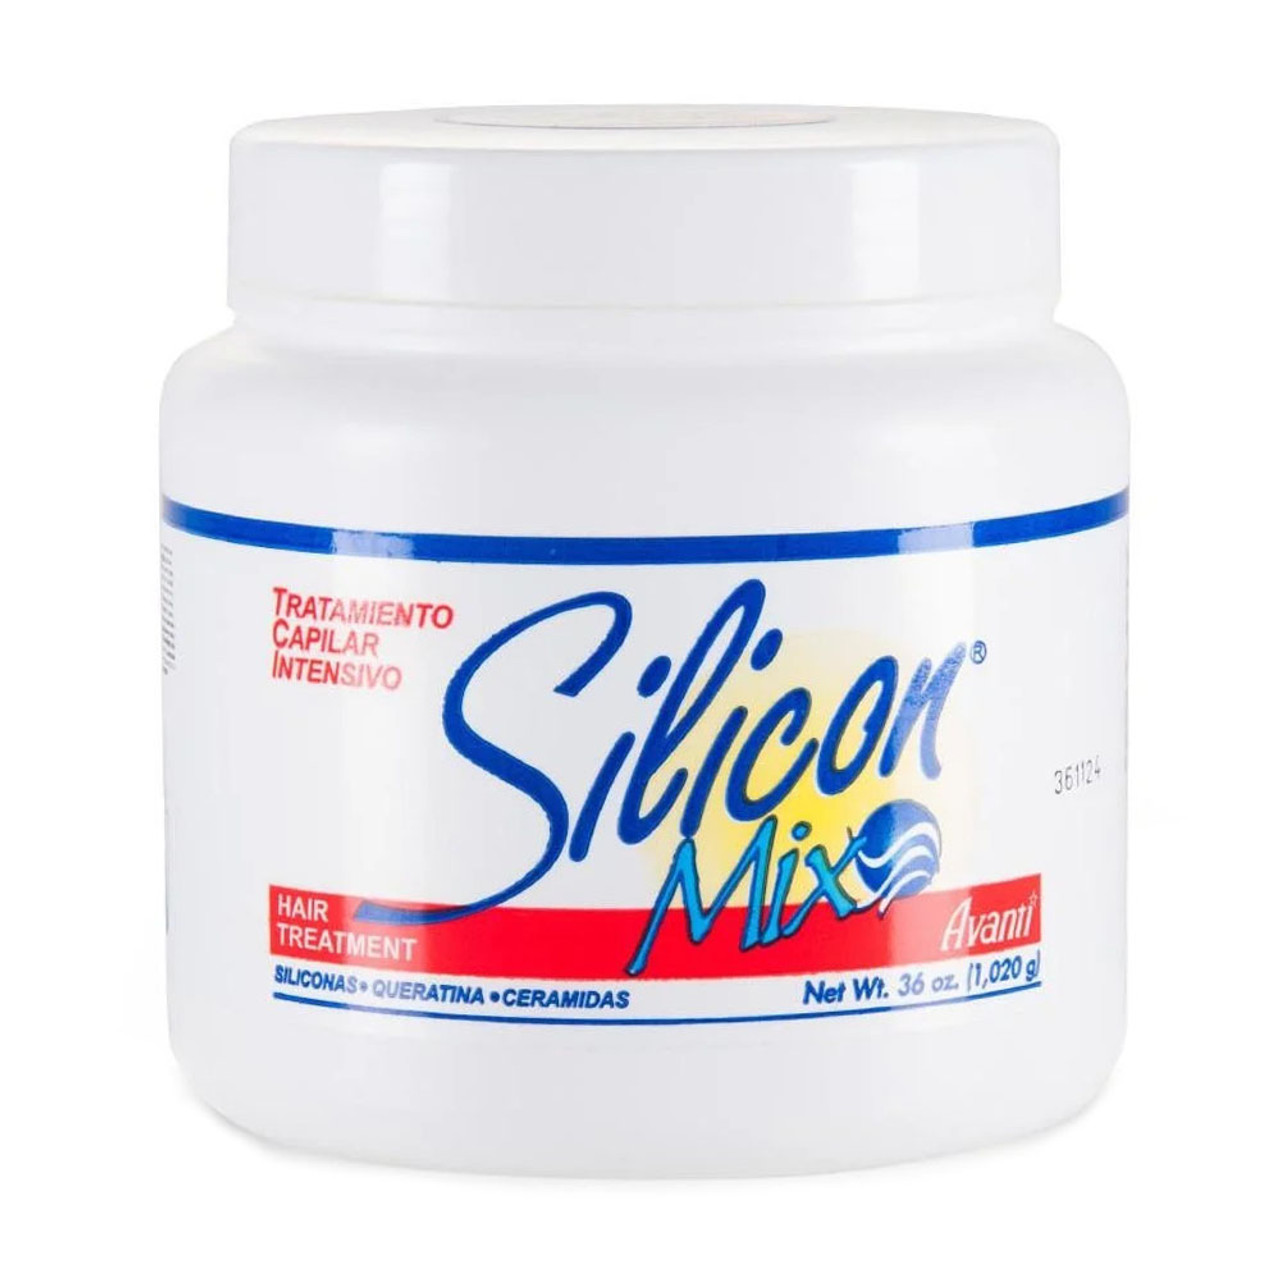 Silicon Mix Hair Treatment Jar, 36 Oz